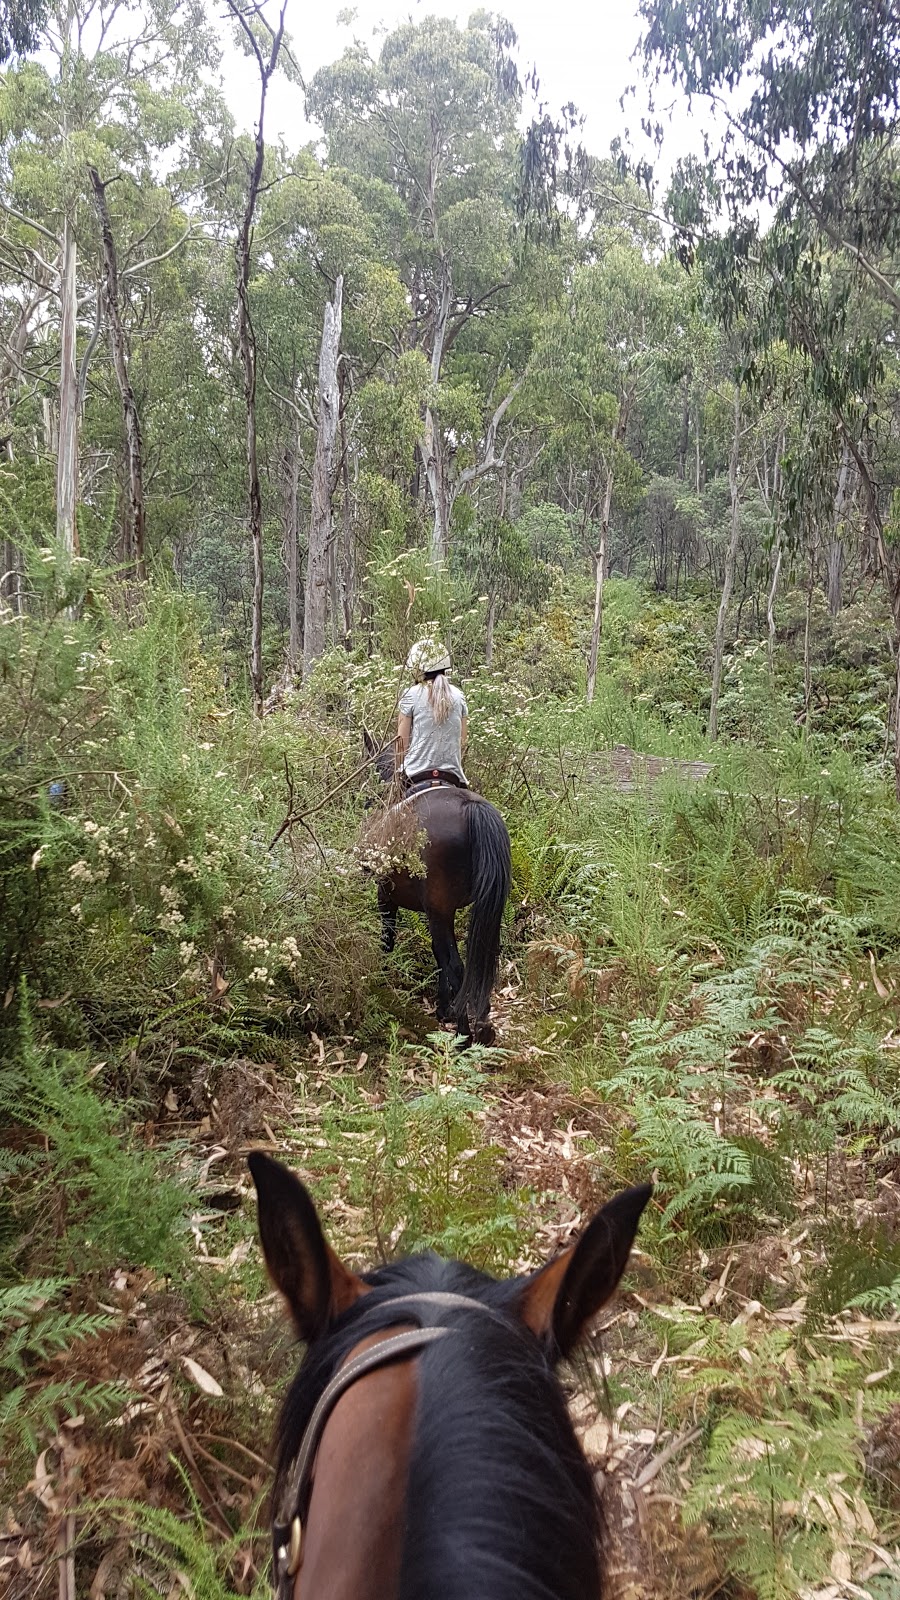 Hidden Trails by Horseback | travel agency | 462 Bunstons Rd, Tolmie VIC 3723, Australia | 0357769867 OR +61 3 5776 9867